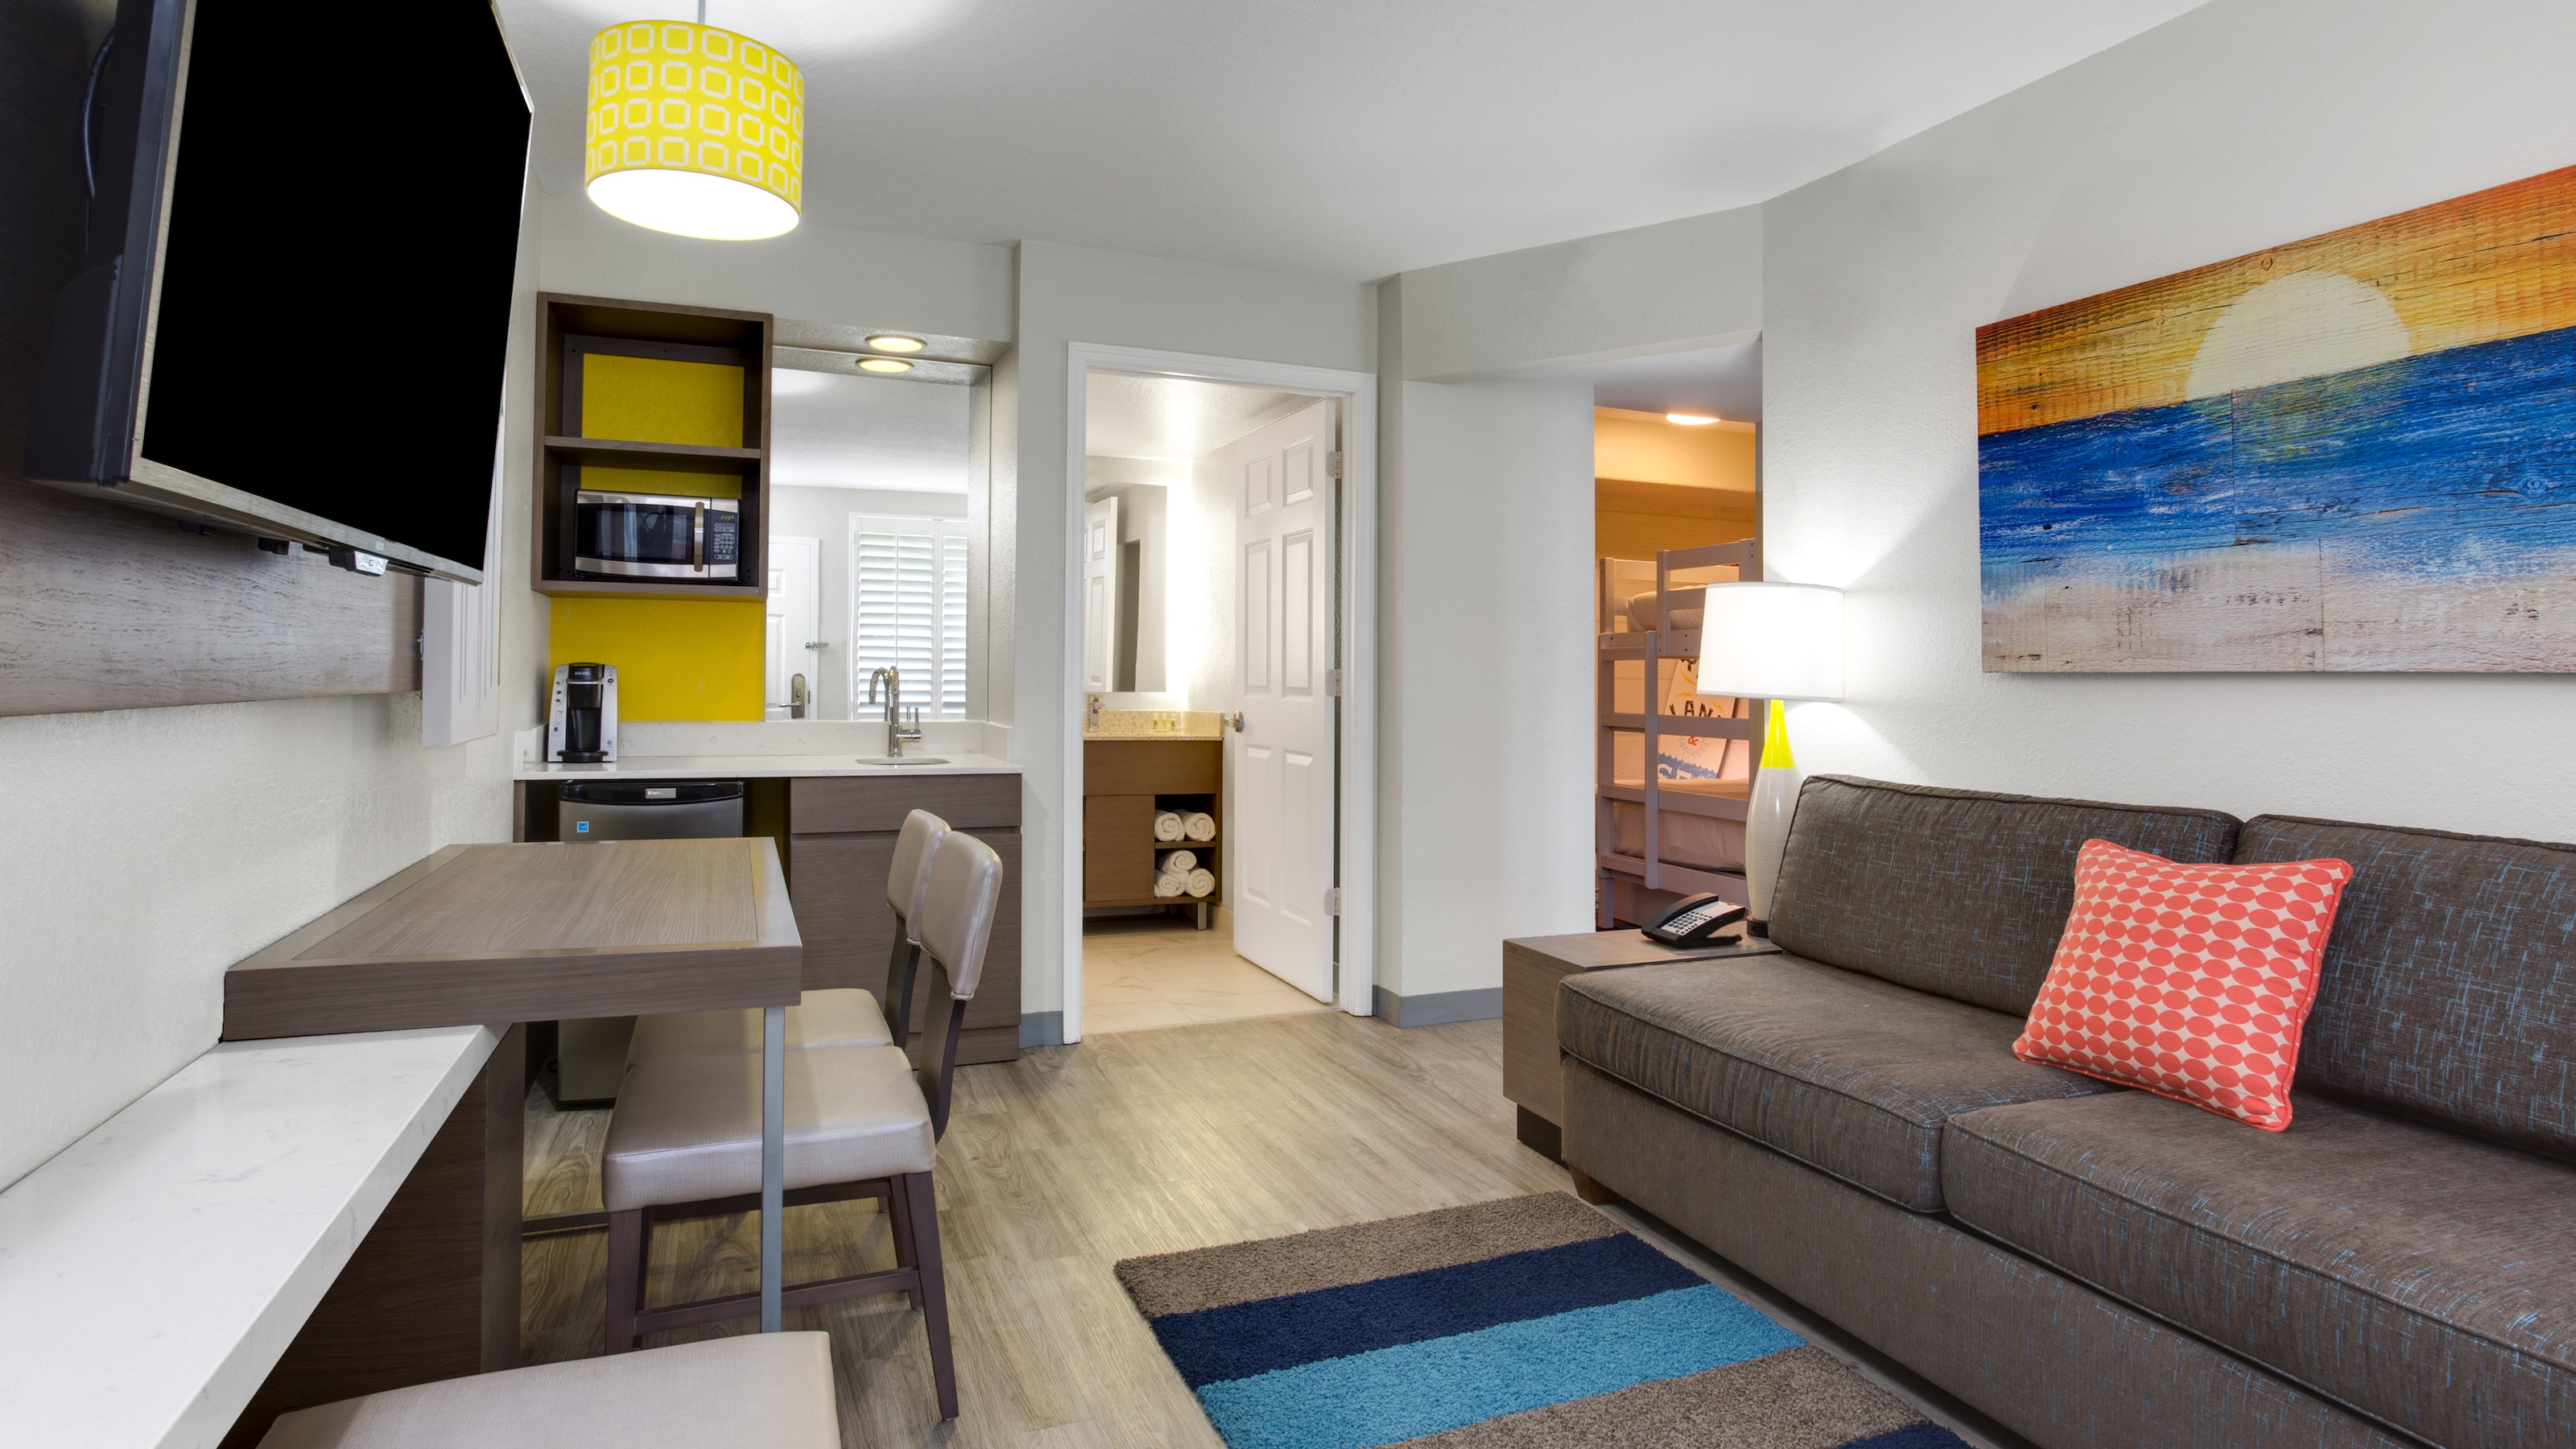 Disfs Holiday Inn Resort Orlando Suites 2br Queen Suite Living Room 16x9 